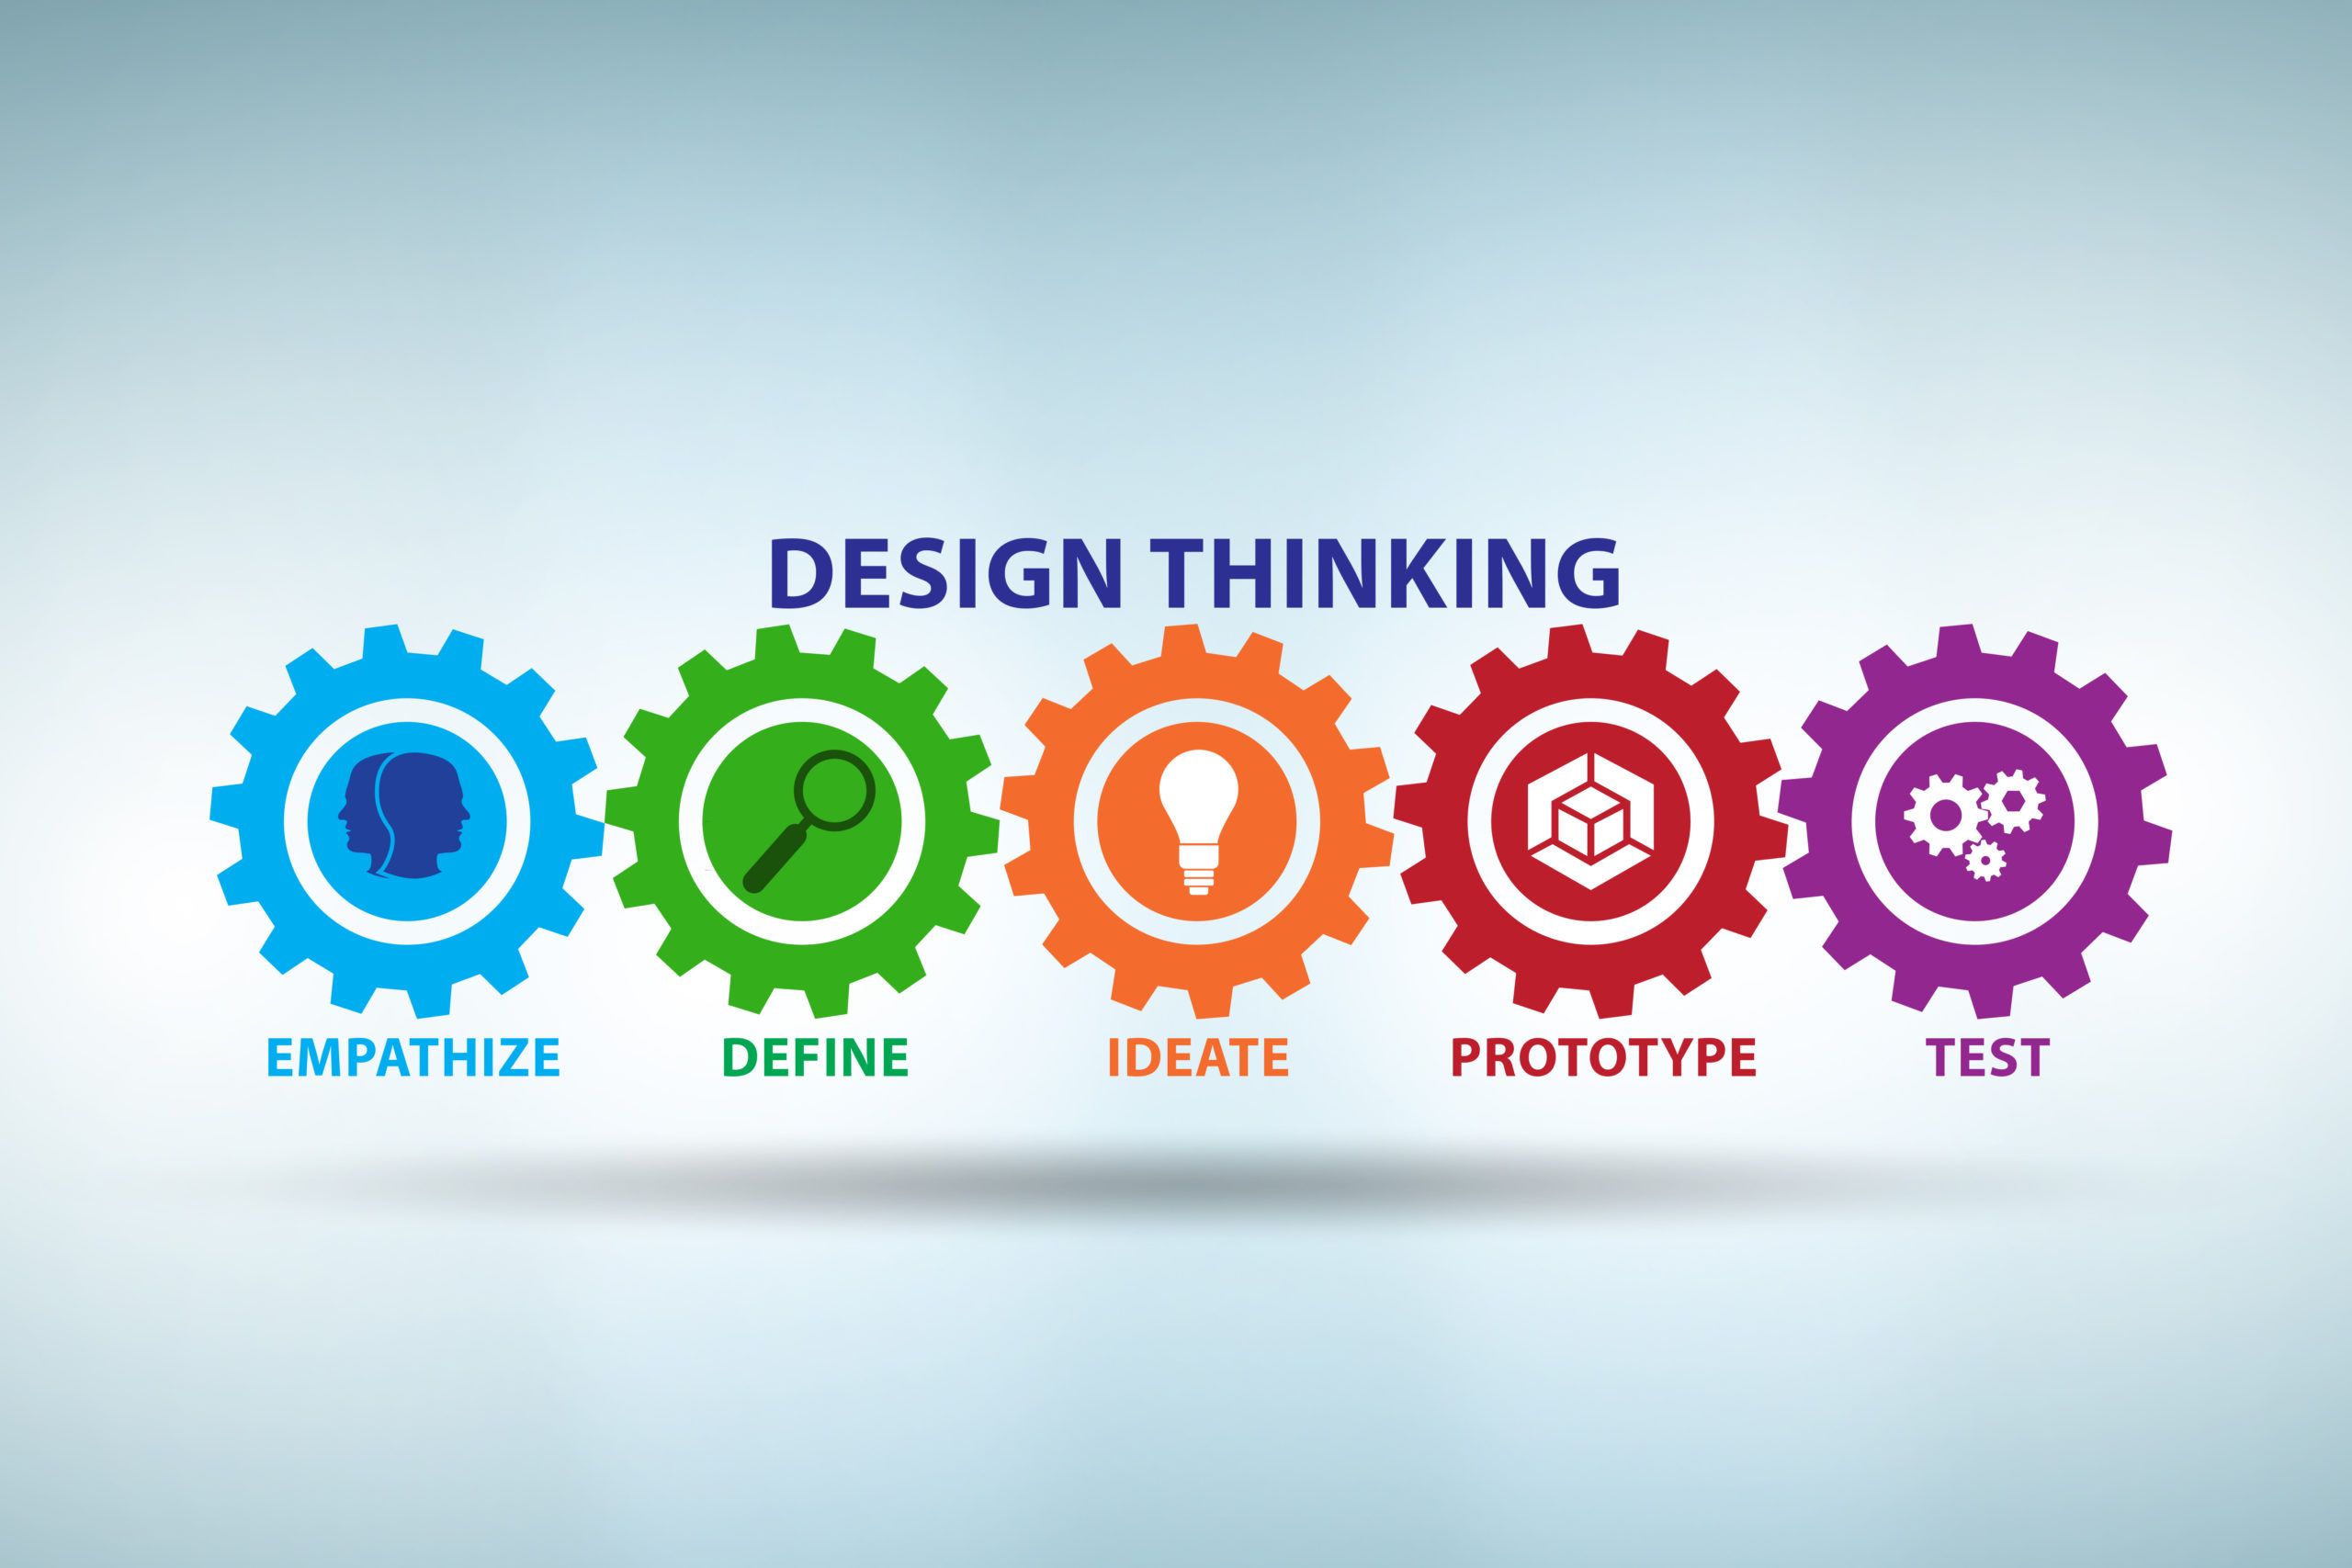 étapes d'un processus de design thinking